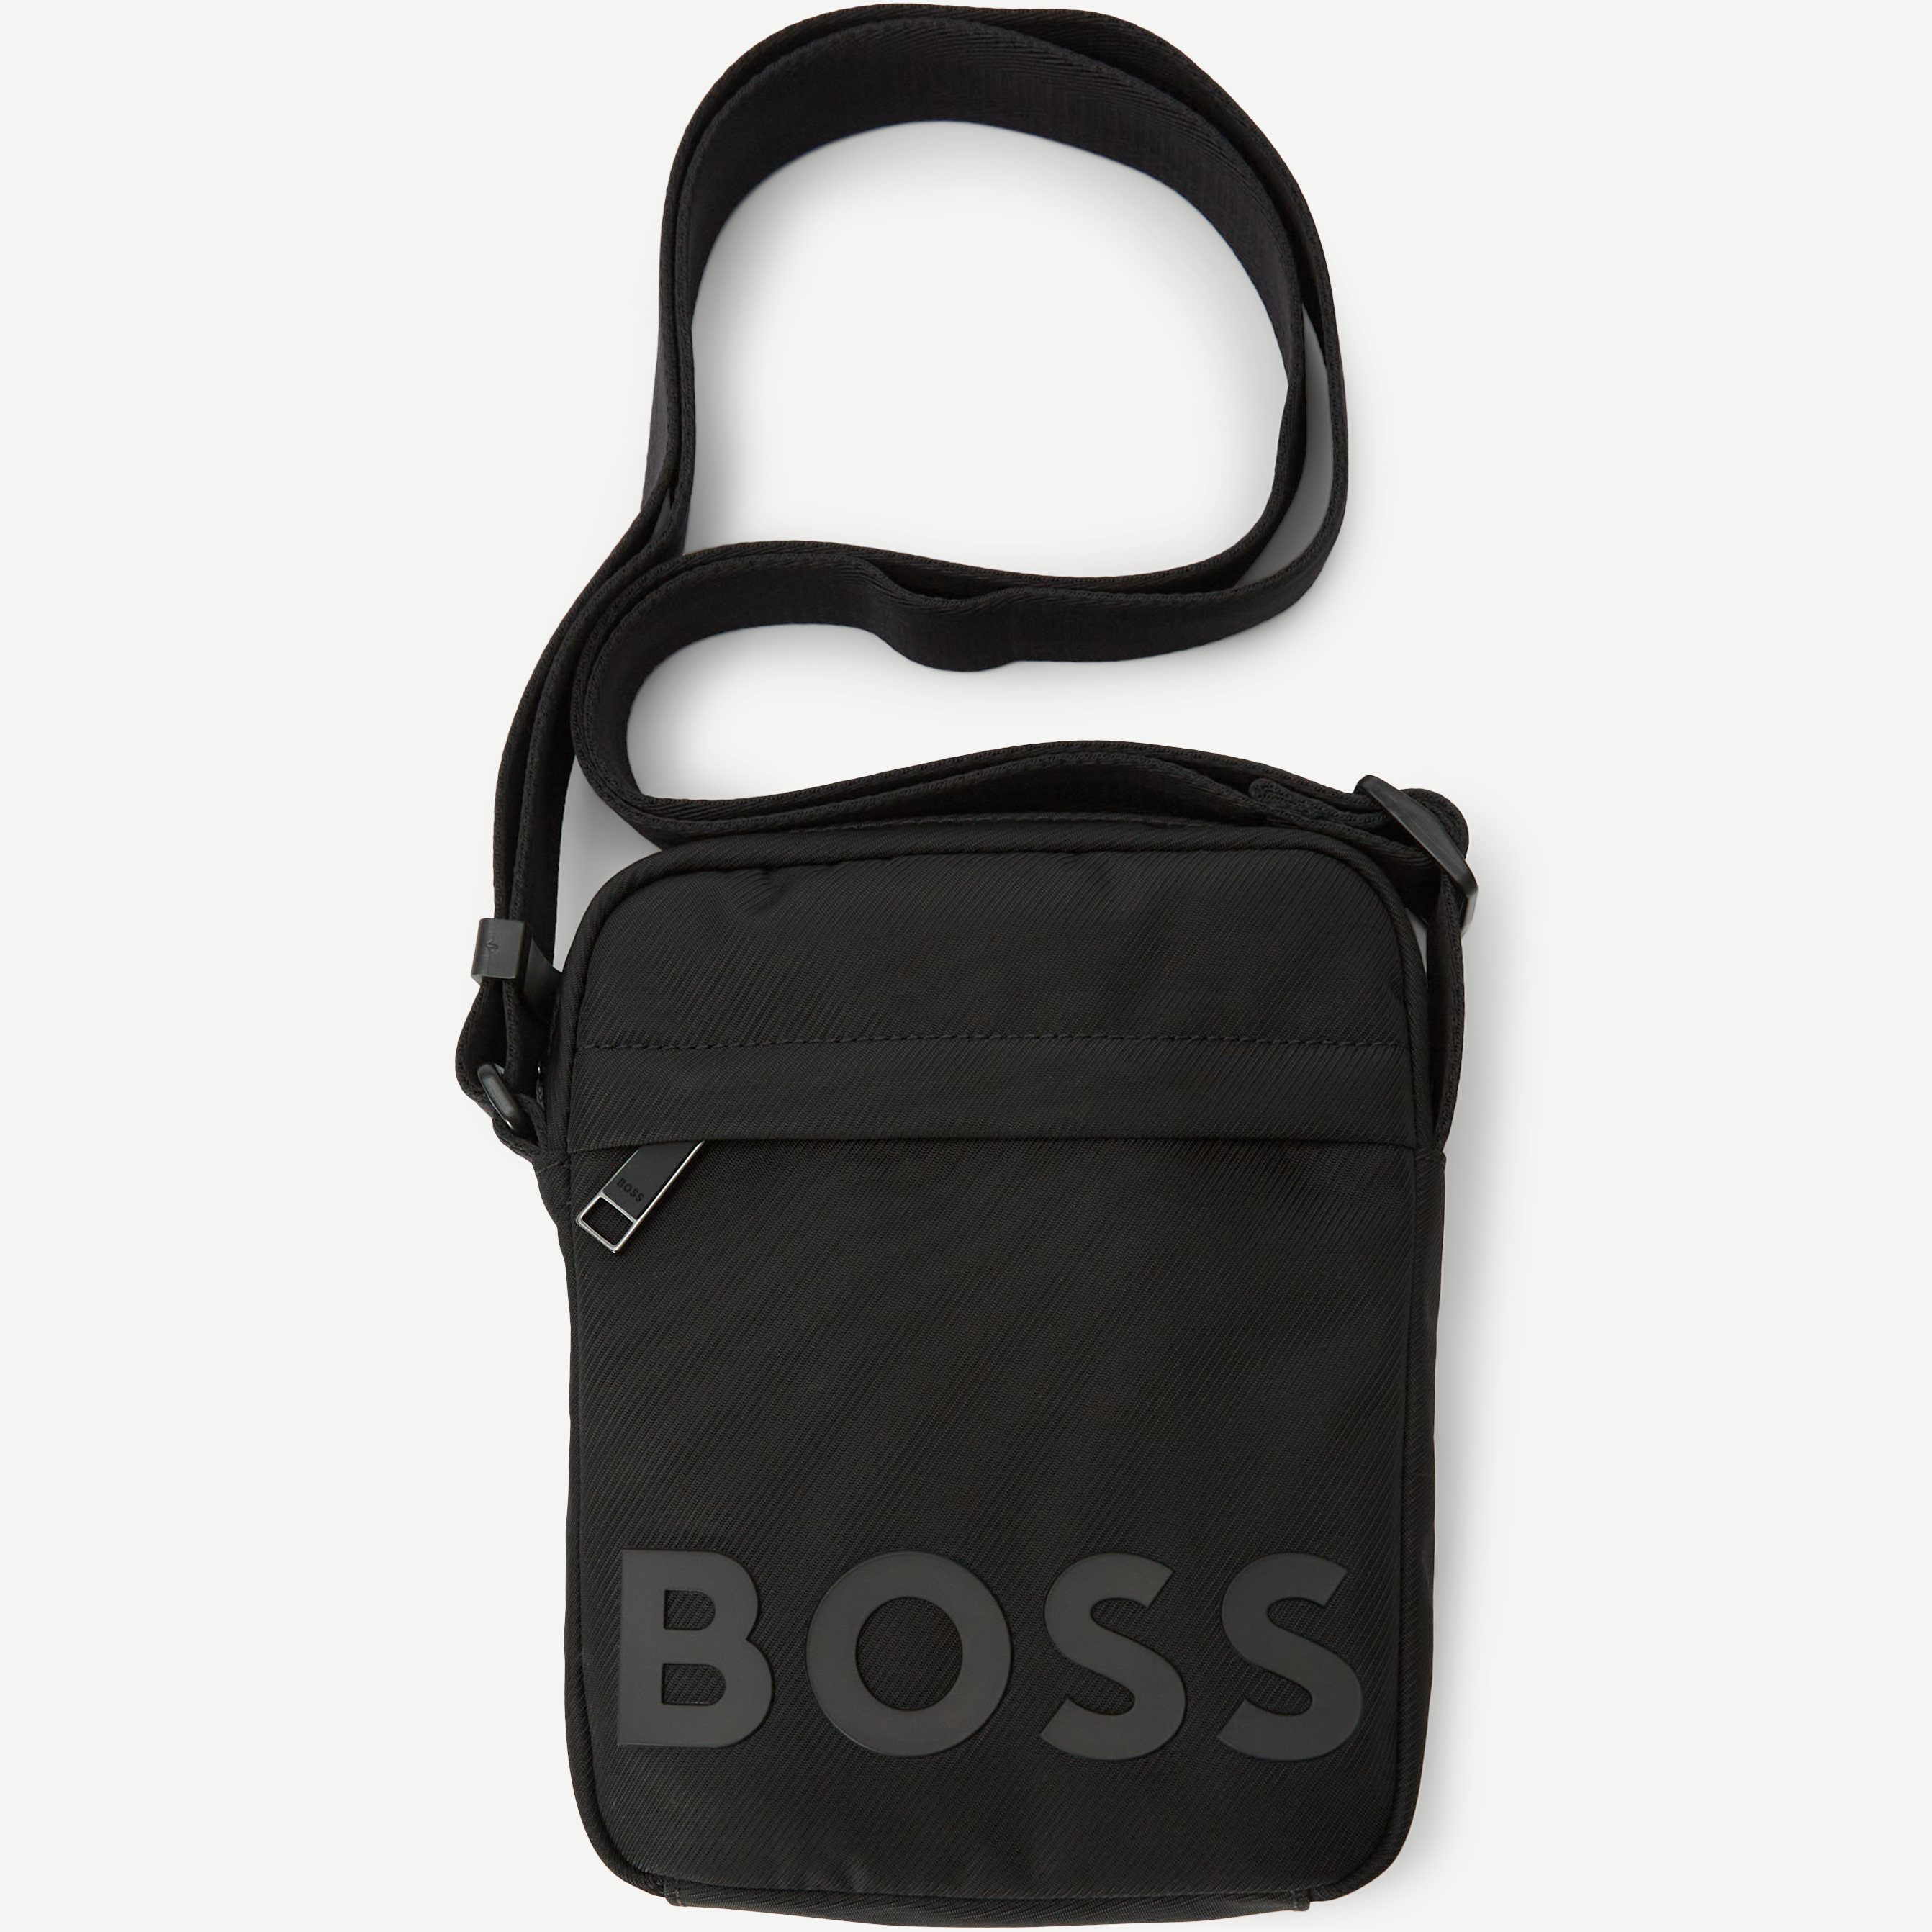 Hugo Boss bags